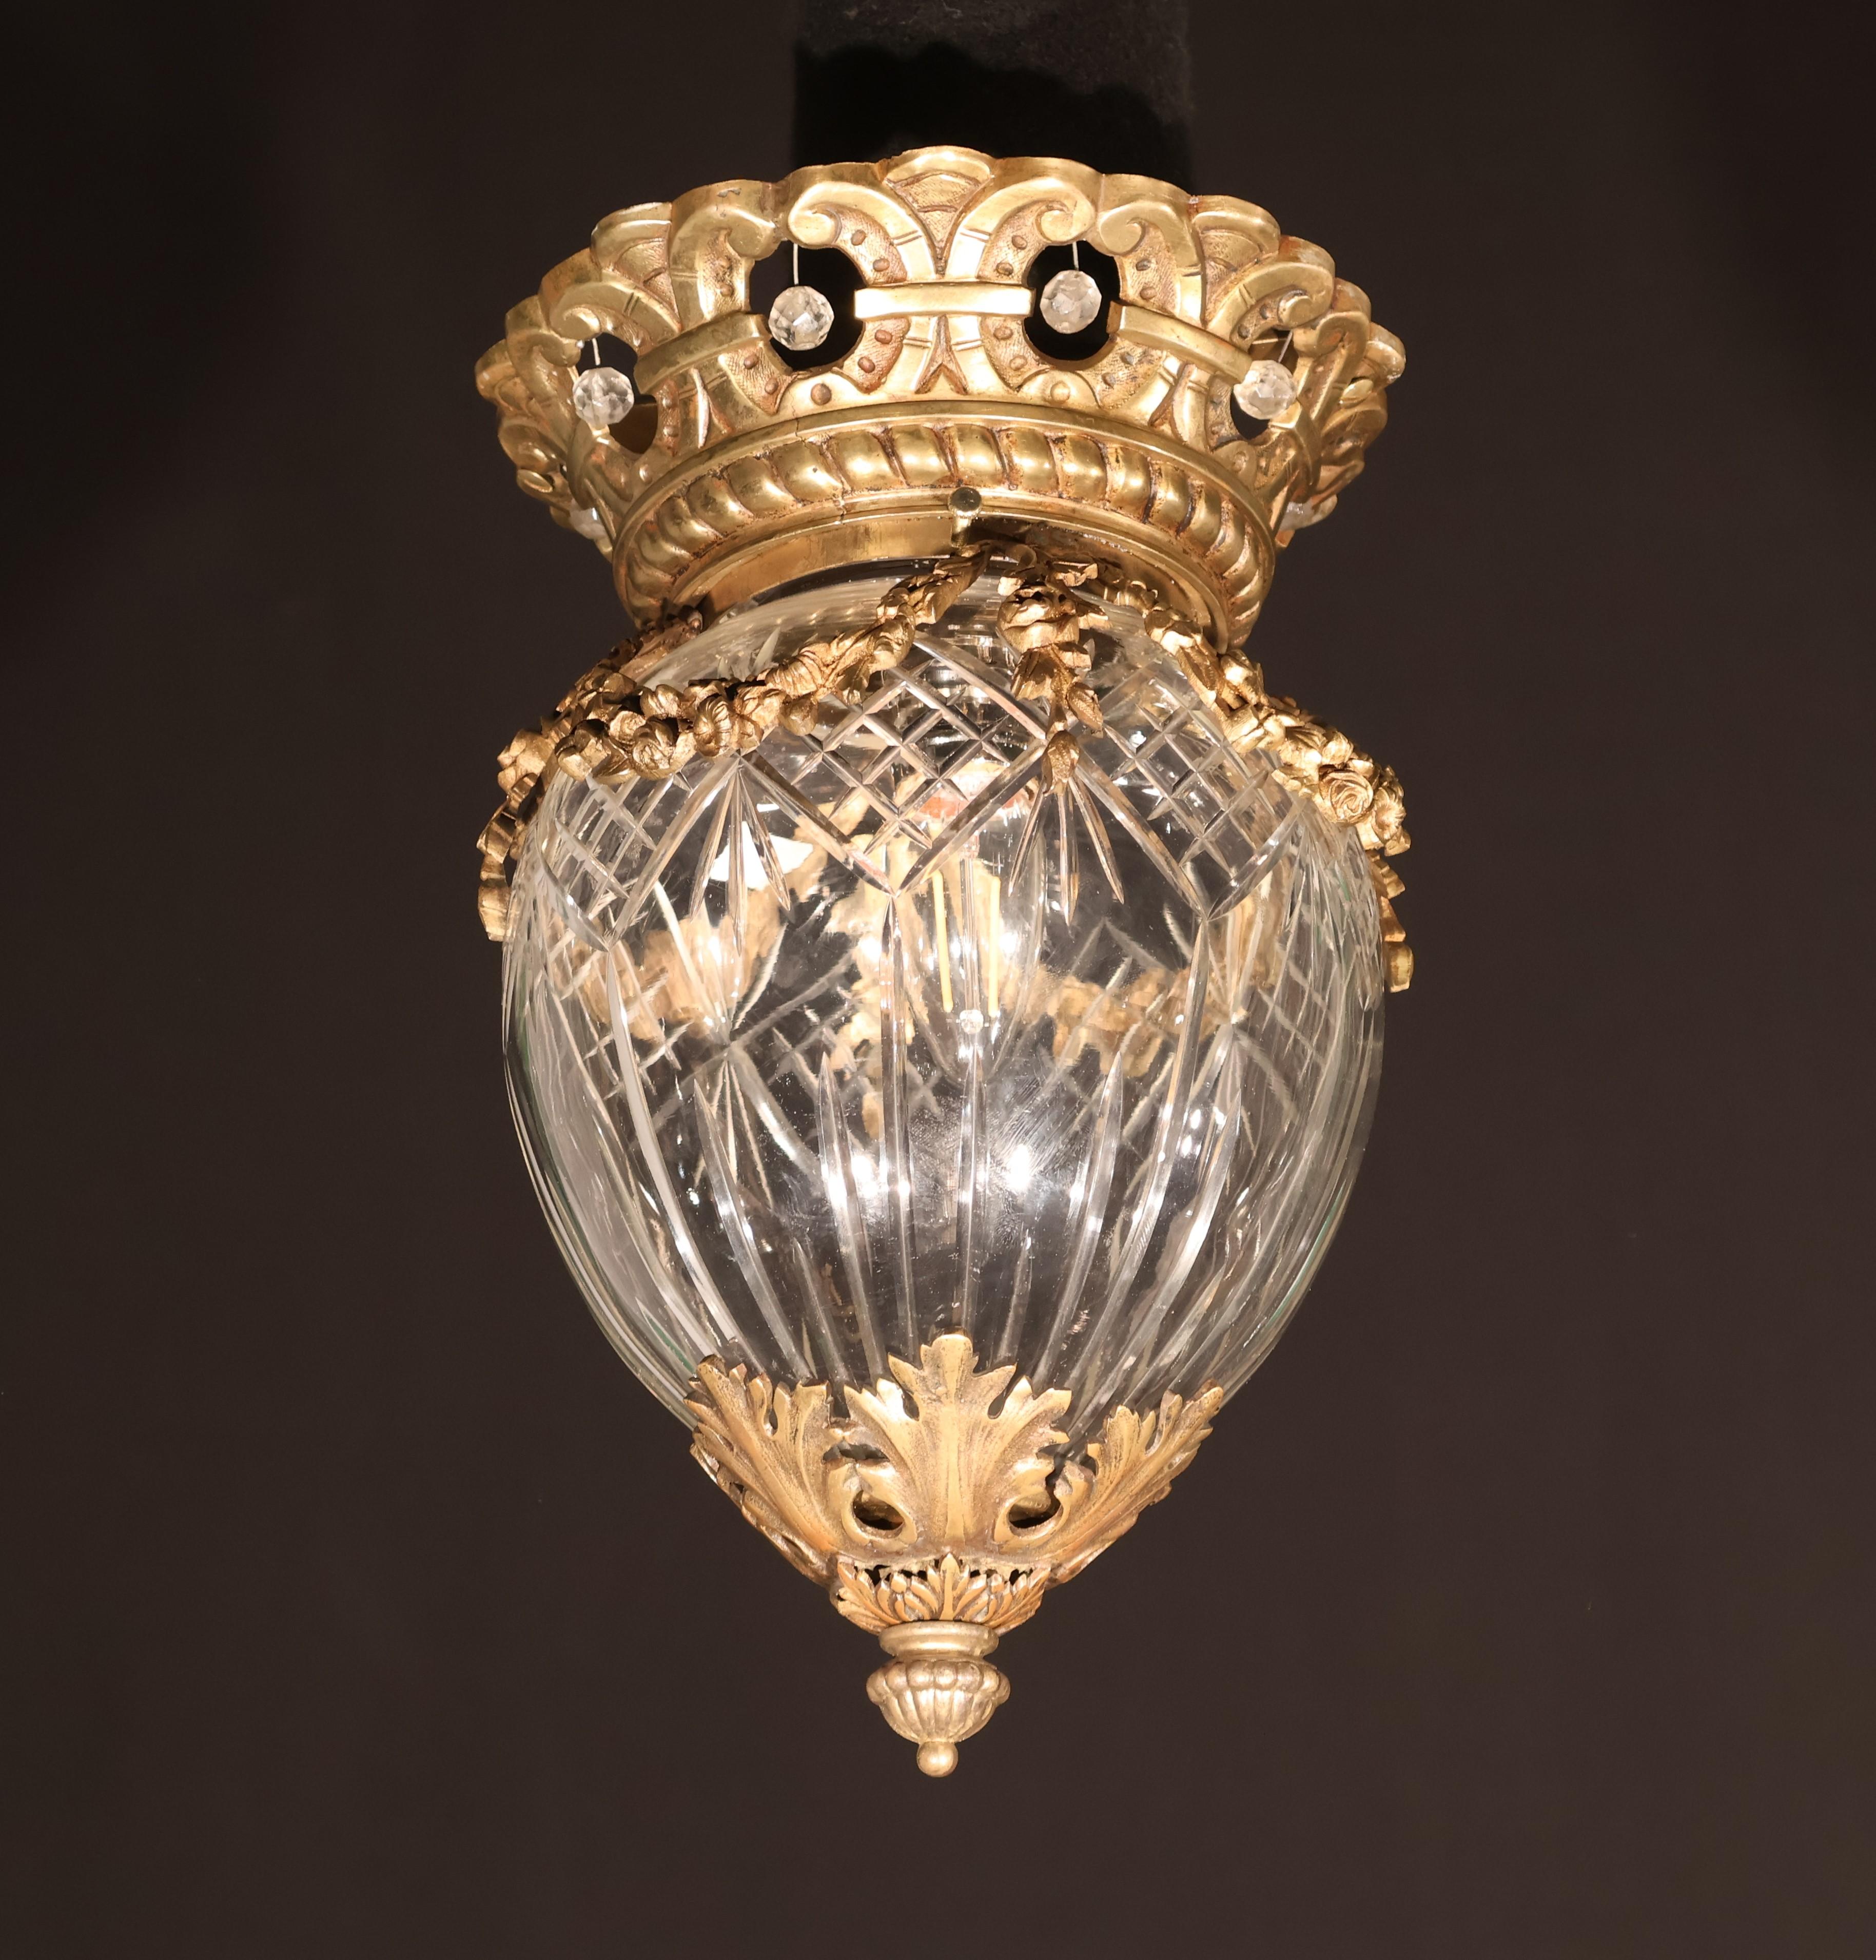 A Very Fine & Decorative Louis XV style Gilt Bronze & Cut Crystal Globe.
1 light. France, circa 1910.
Dimensions: Height 13